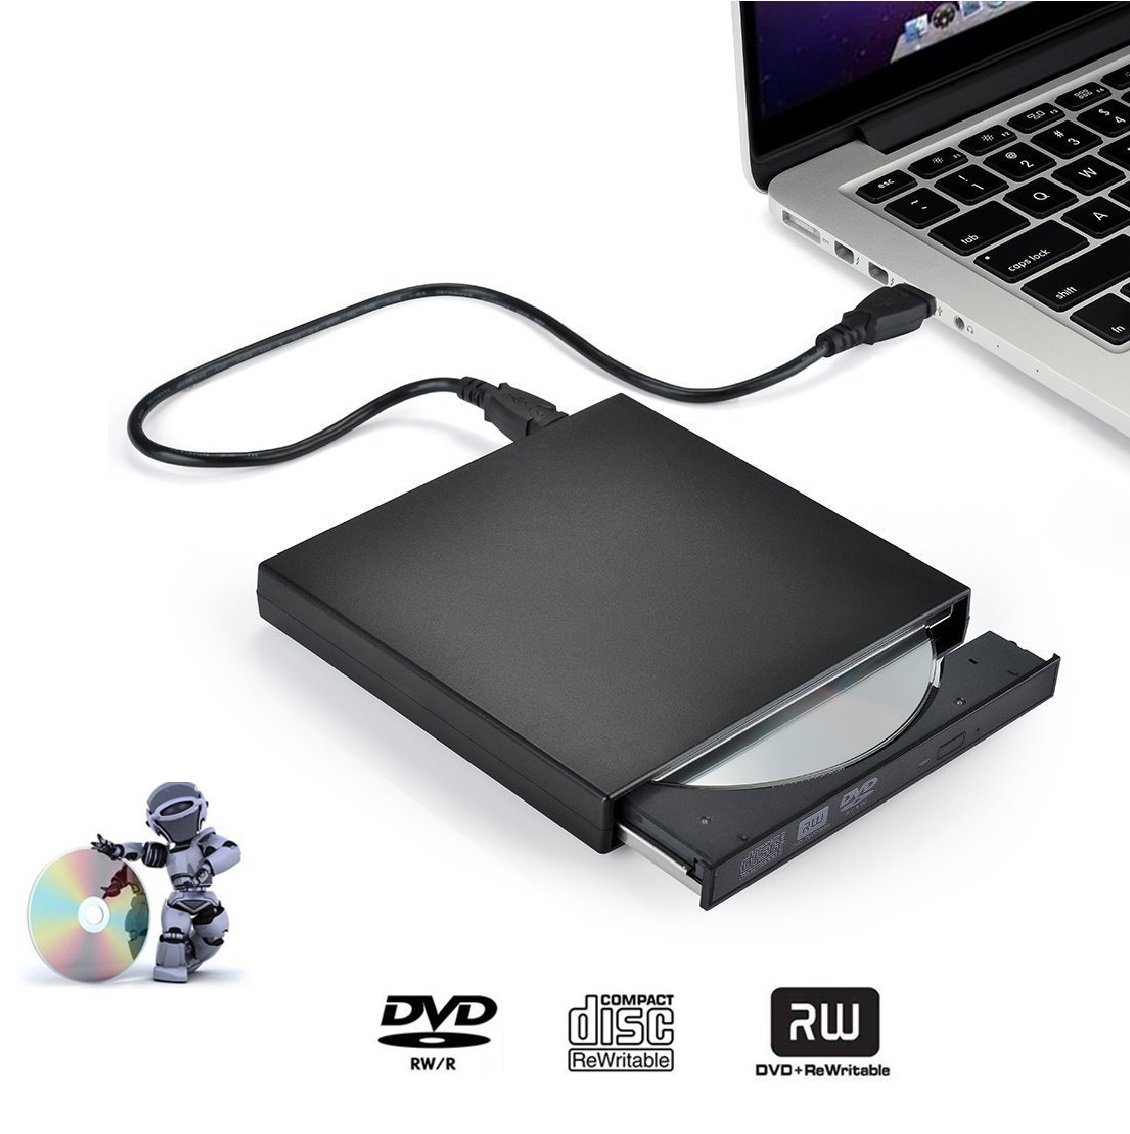 Grabadora externa DVD USB 2.0 solo 10,1€